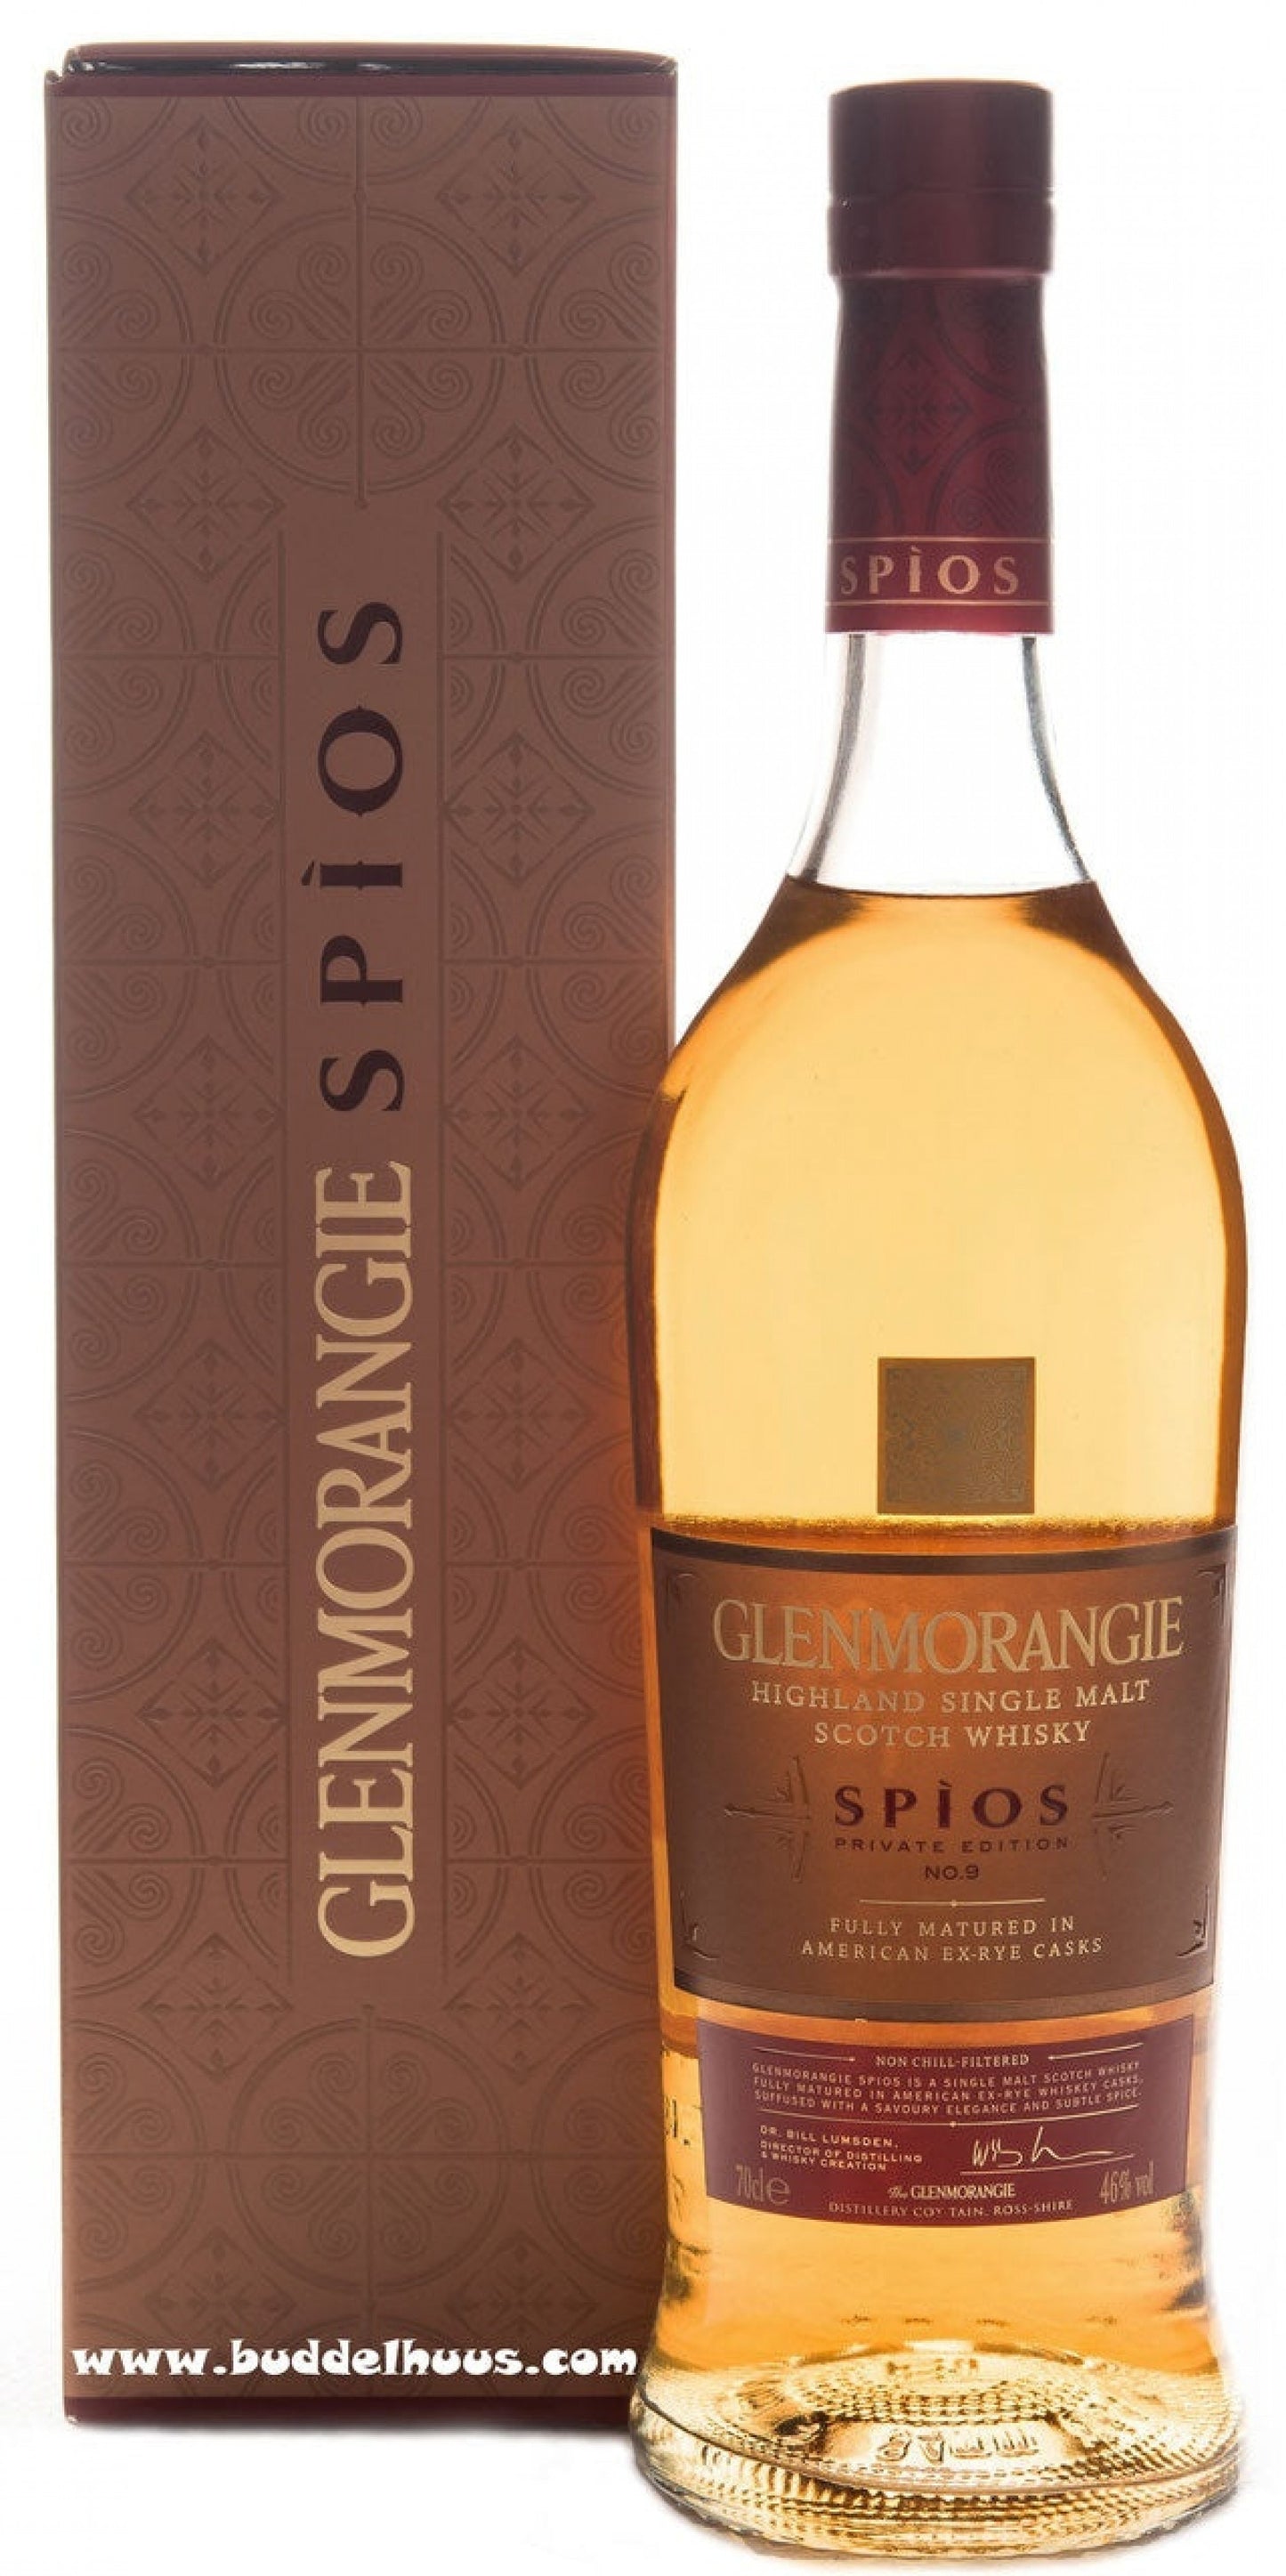 Glenmorangie Spios Private Edition No 9